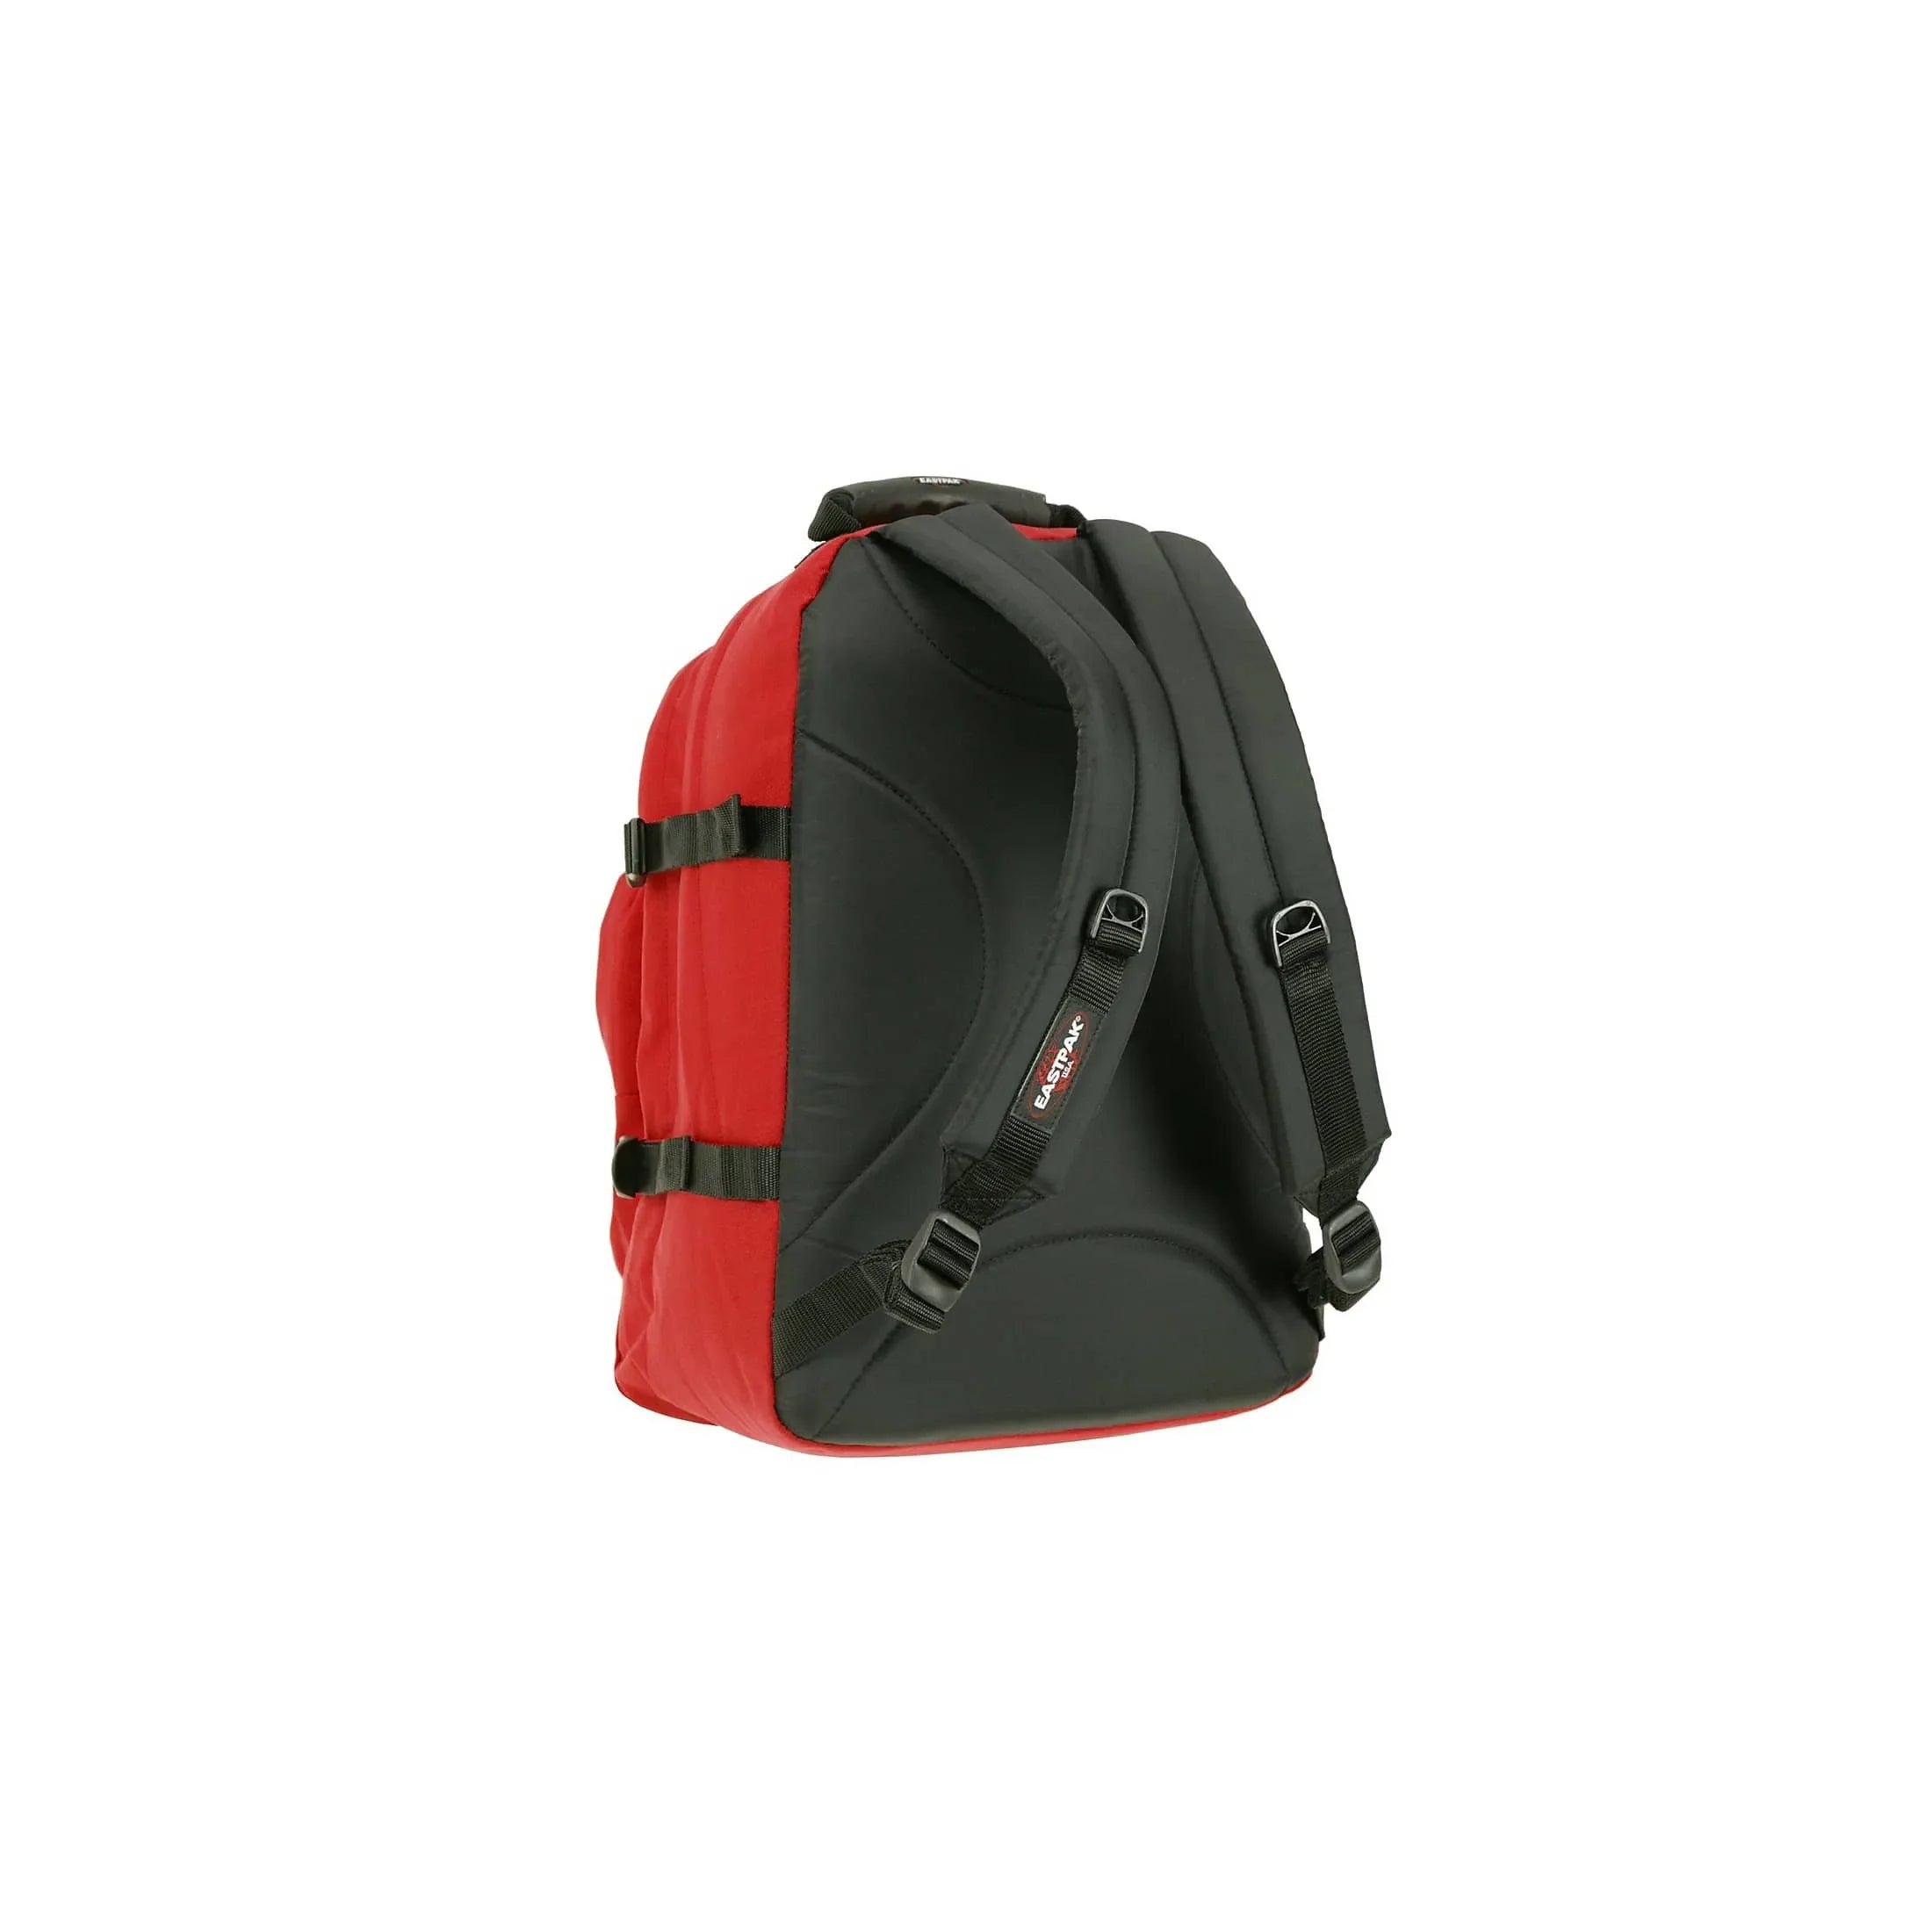 Eastpak Authentic Provider Laptop Backpack 44 cm - Sailor Red